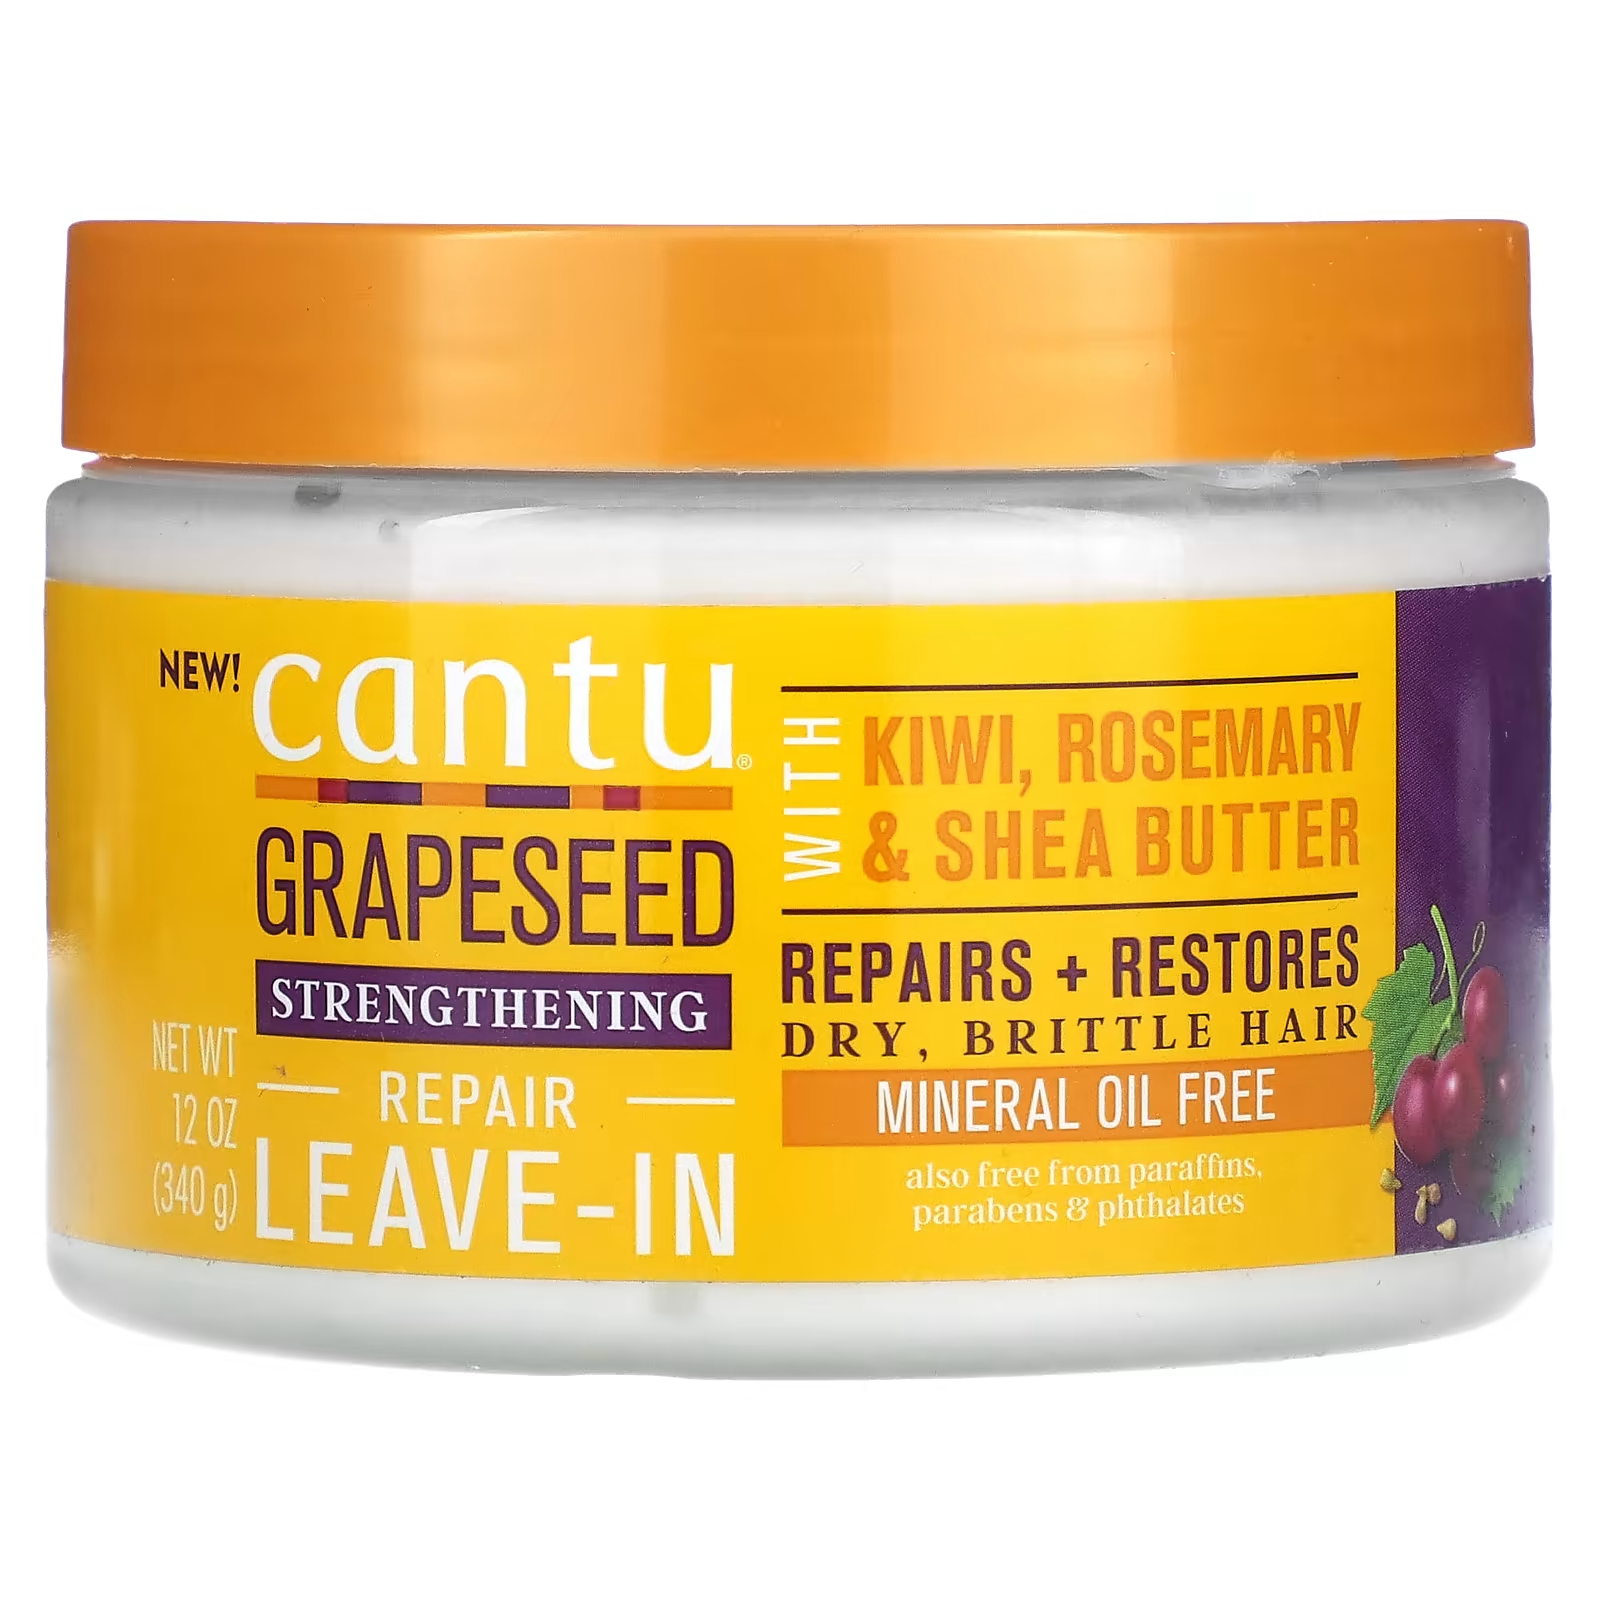 Средство Cantu Grapeseed Strengthening Repair для сухих и ломких волос, 340 г